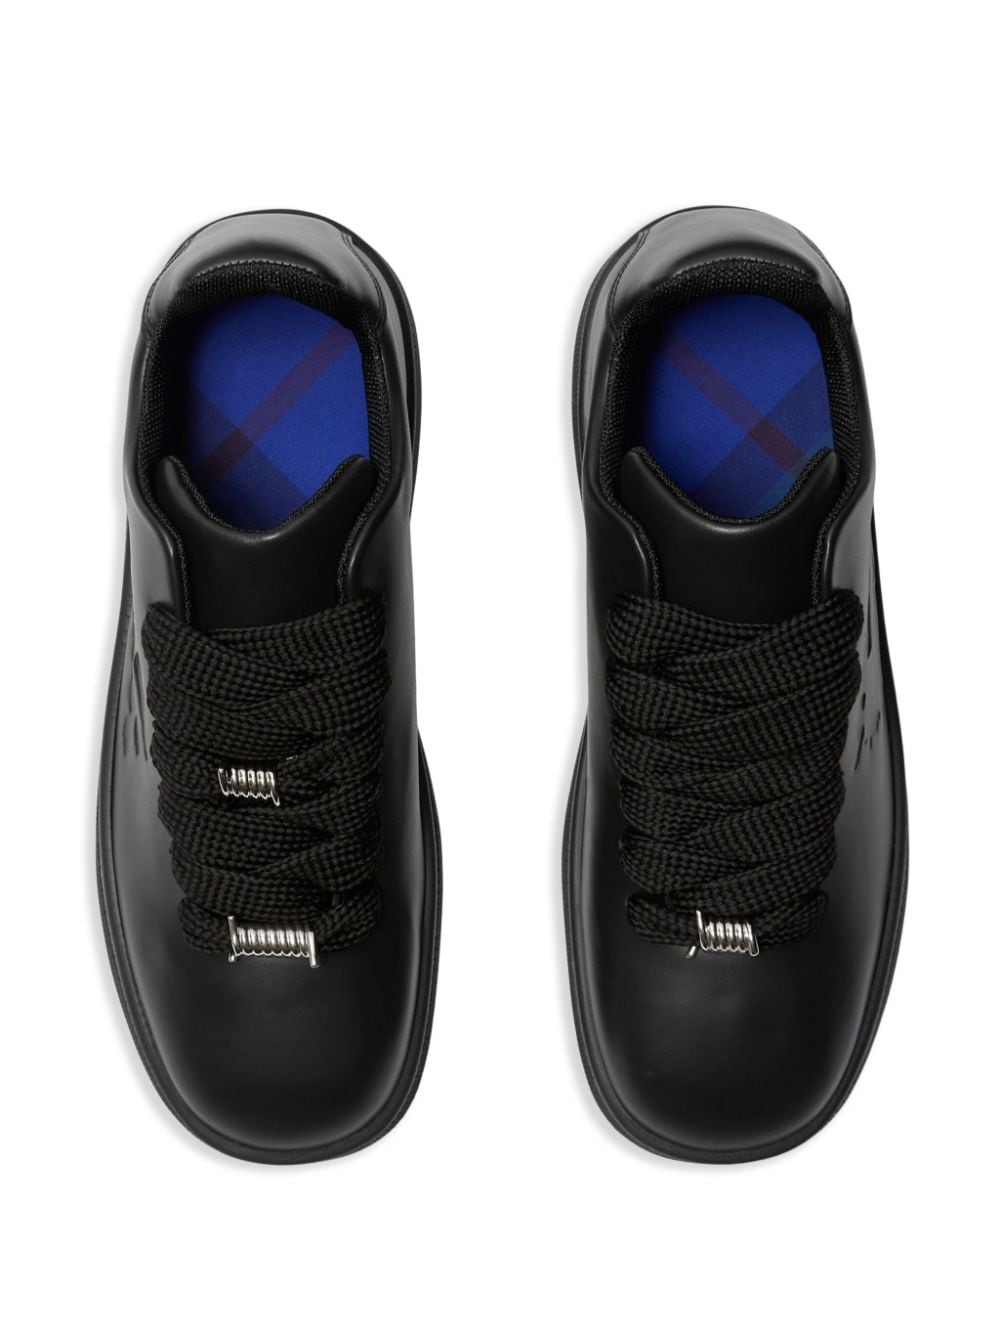 Burberry Sneakers Black